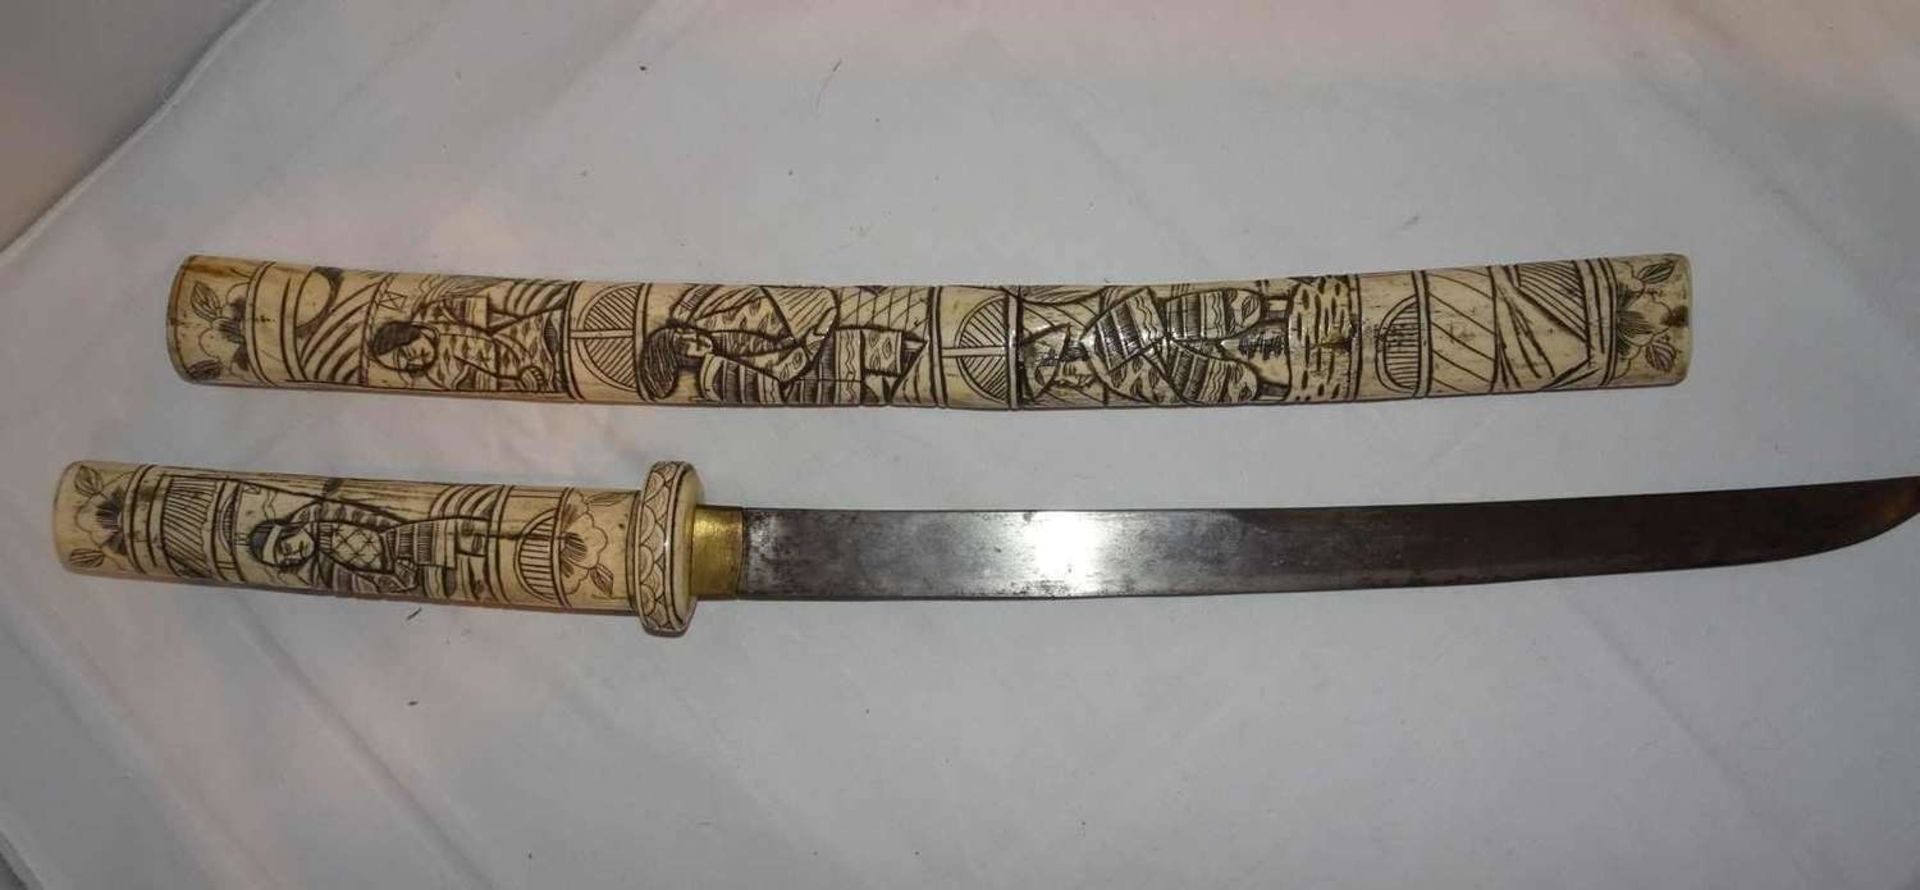 Ein Samurai Kurzschwert um 1900, Hirschhorn, Japan. Meiji Periode. Handgeschnitzt und geschwärzt, - Image 3 of 4